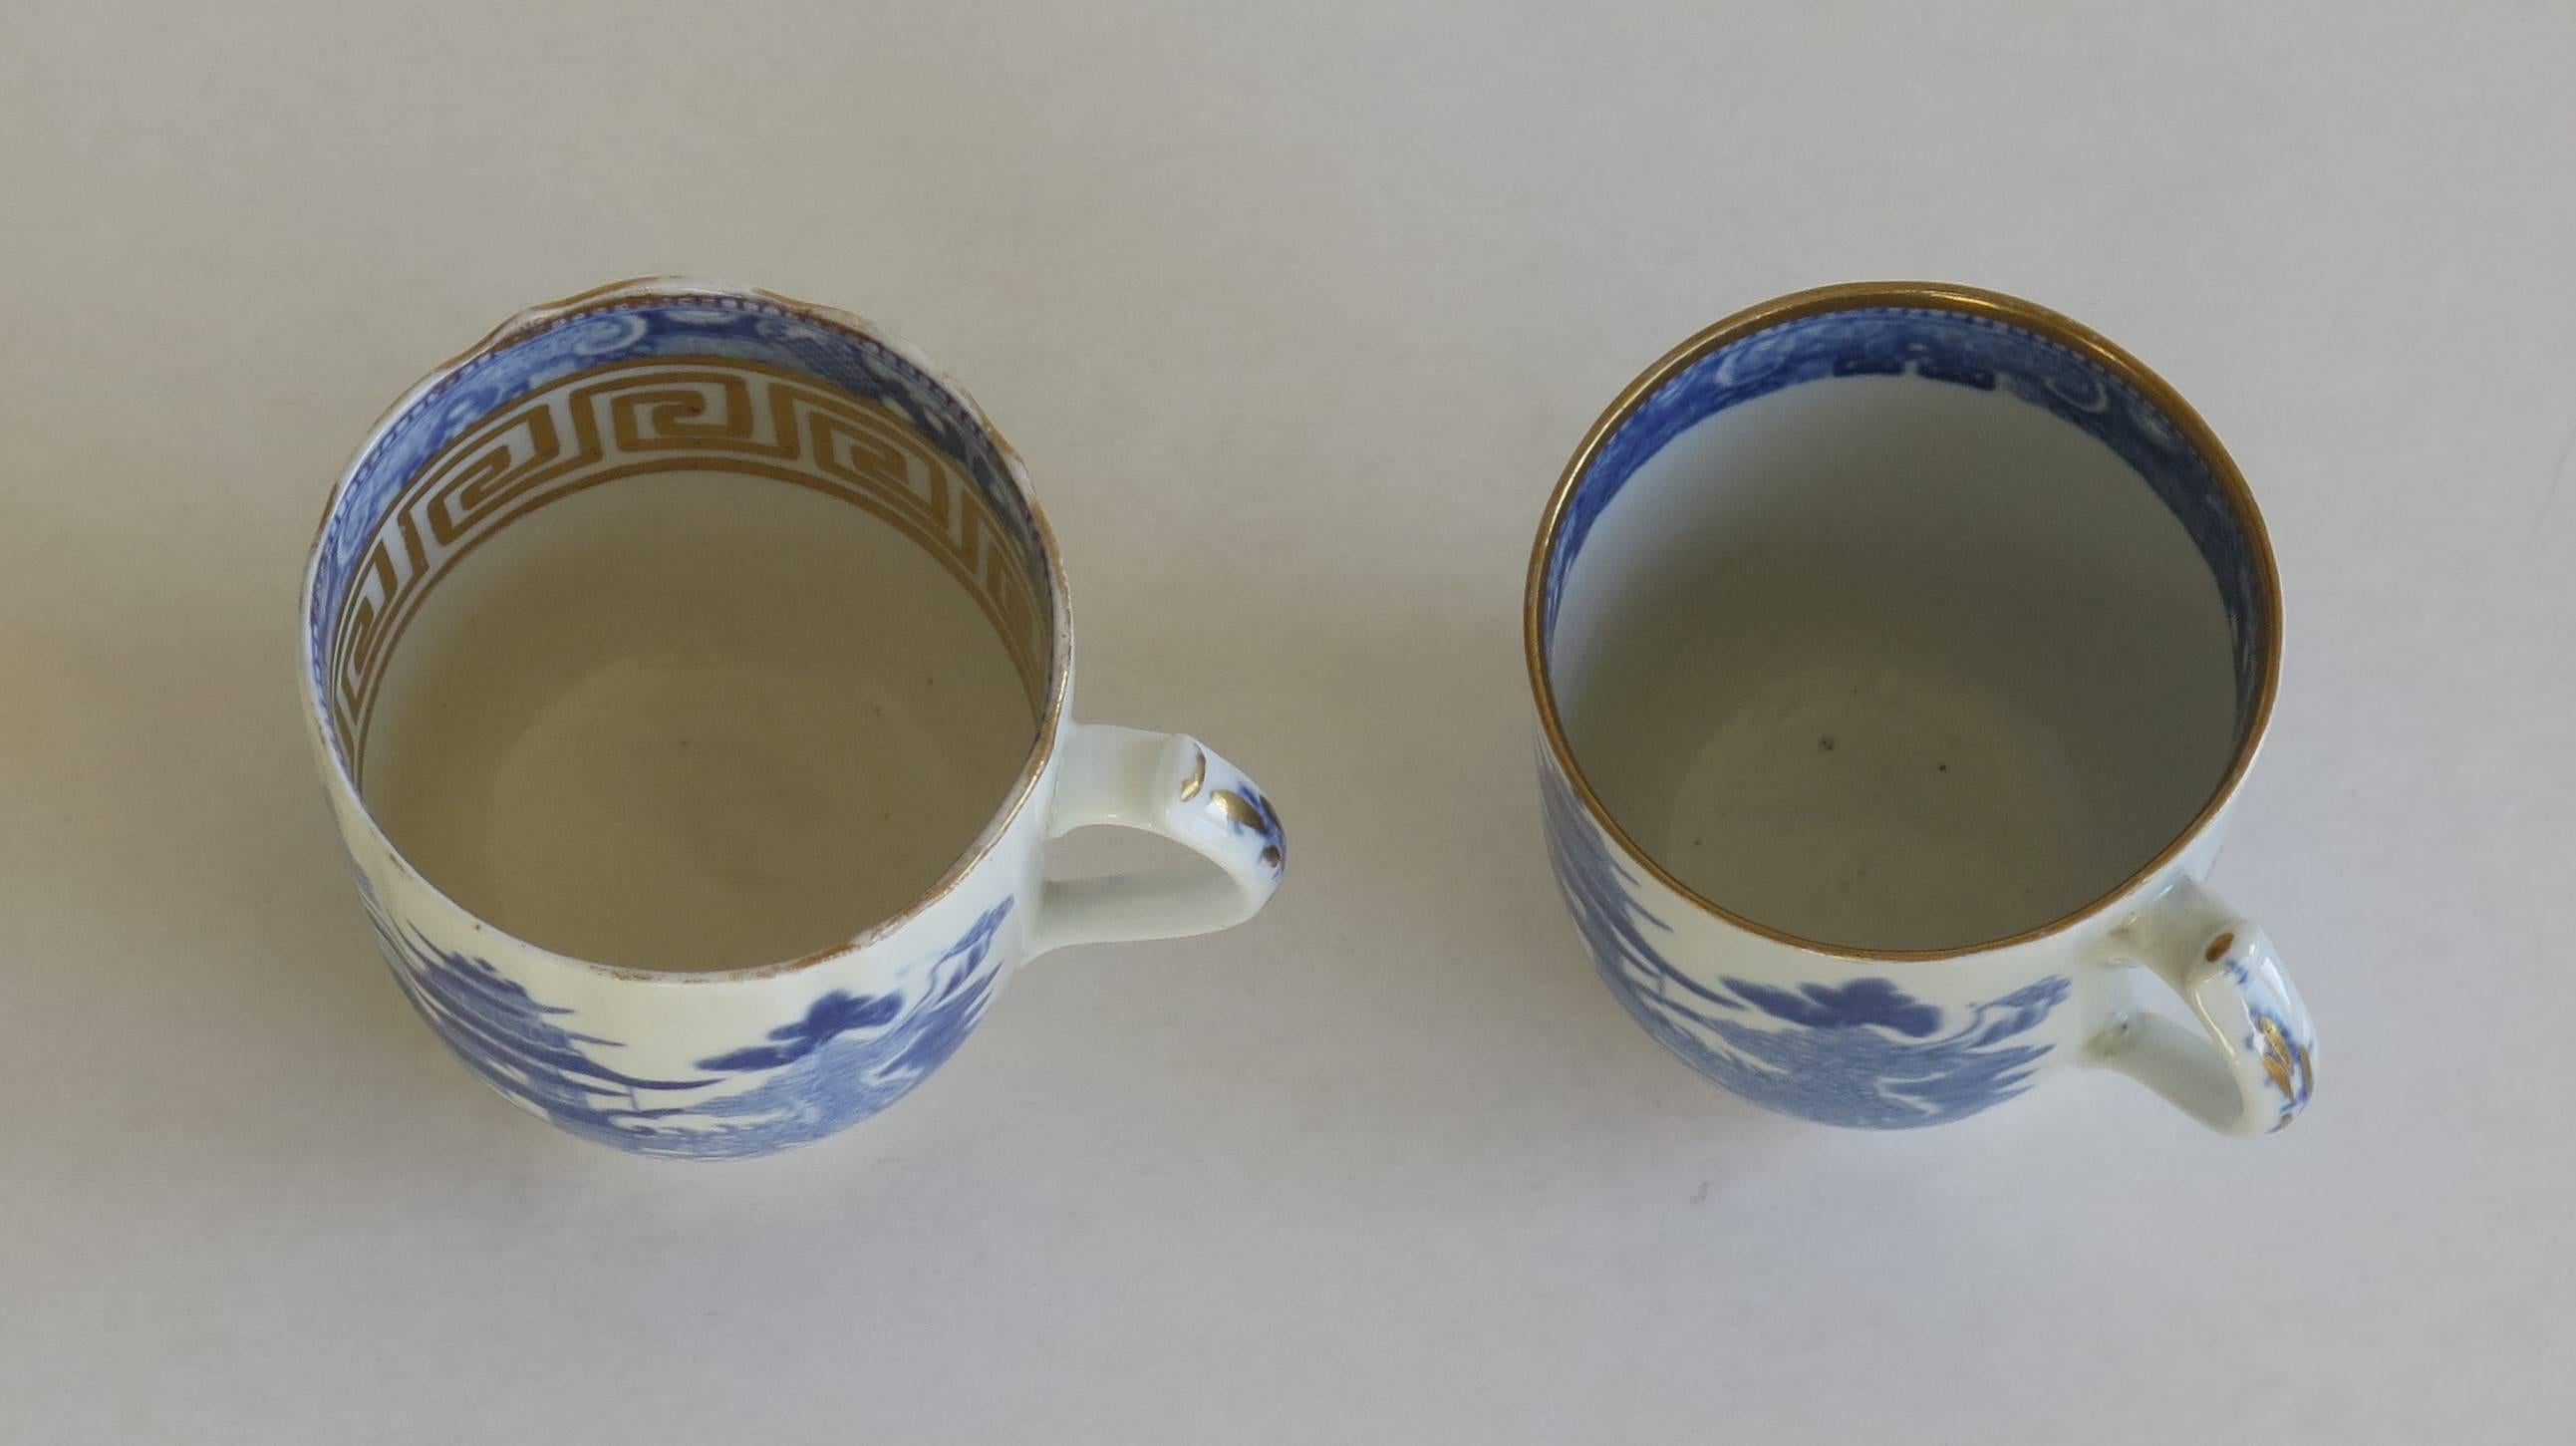 Similar PAIR of Miles Mason's Coffee Cans, Porcelain, Pagoda Pattern, circa 1800 2